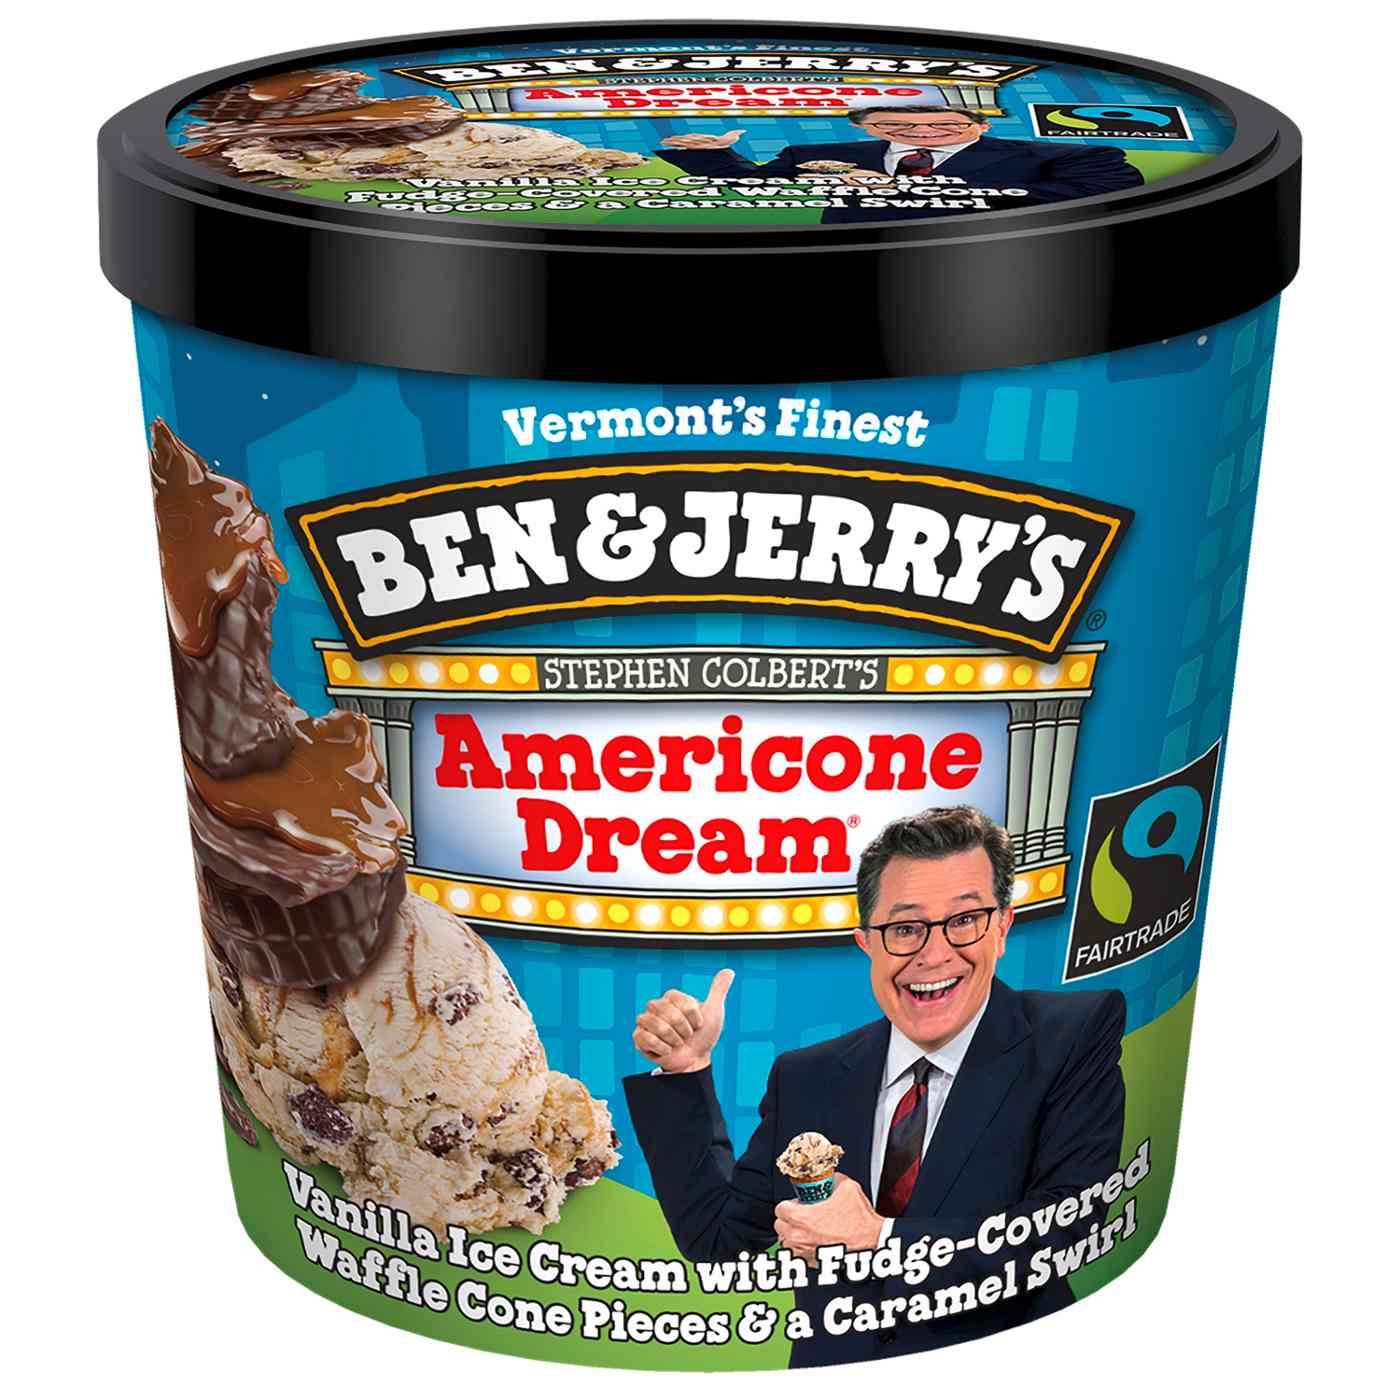 Ben & Jerry's Americone Dream Ice Cream; image 1 of 2